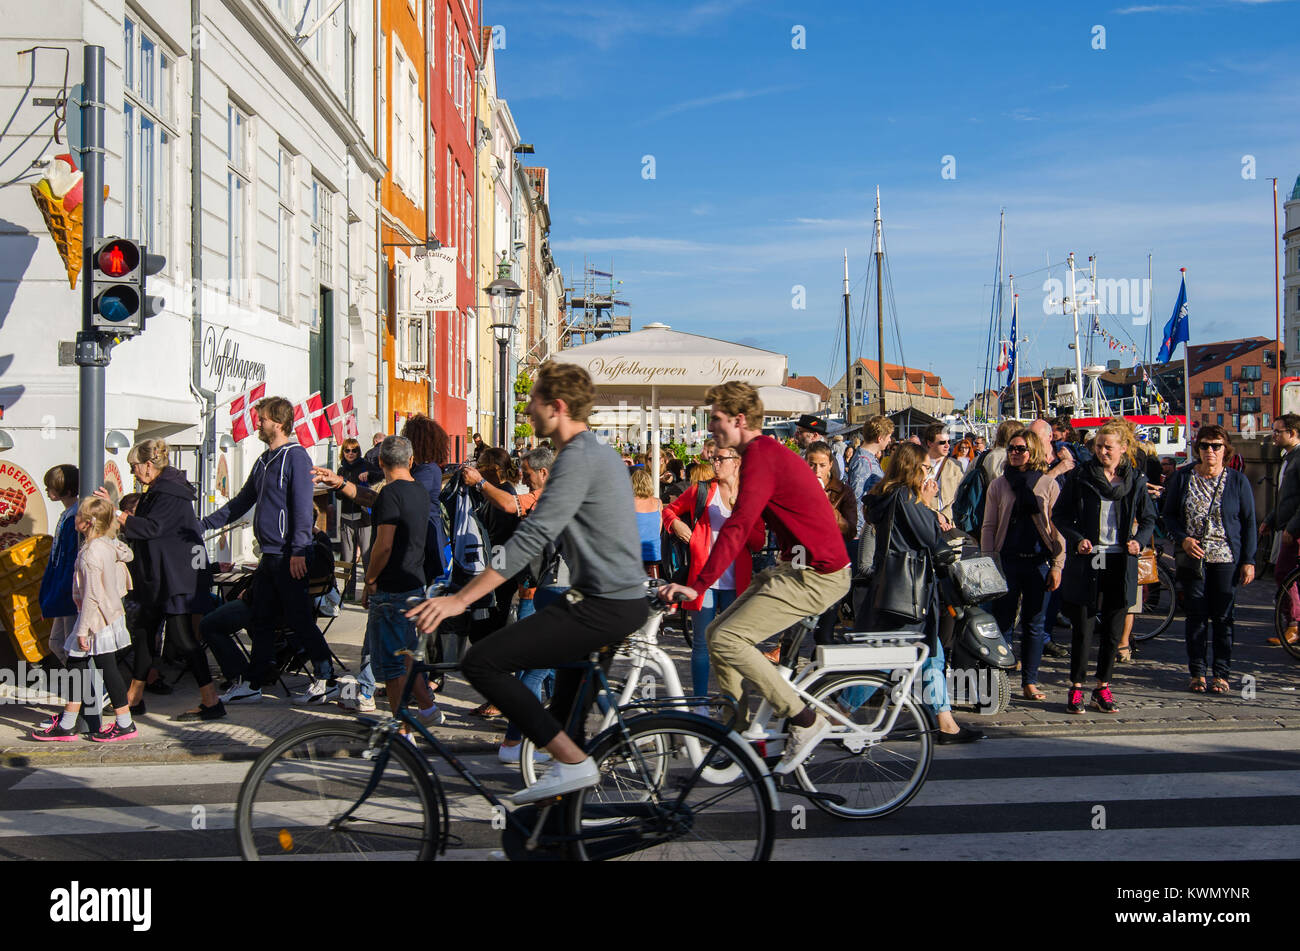 Kopenhagen, Dänemark. September 2016. Menschen Radfahren in der Nähe der berühmten Eis Ort: Vaffelbageren. Stockfoto